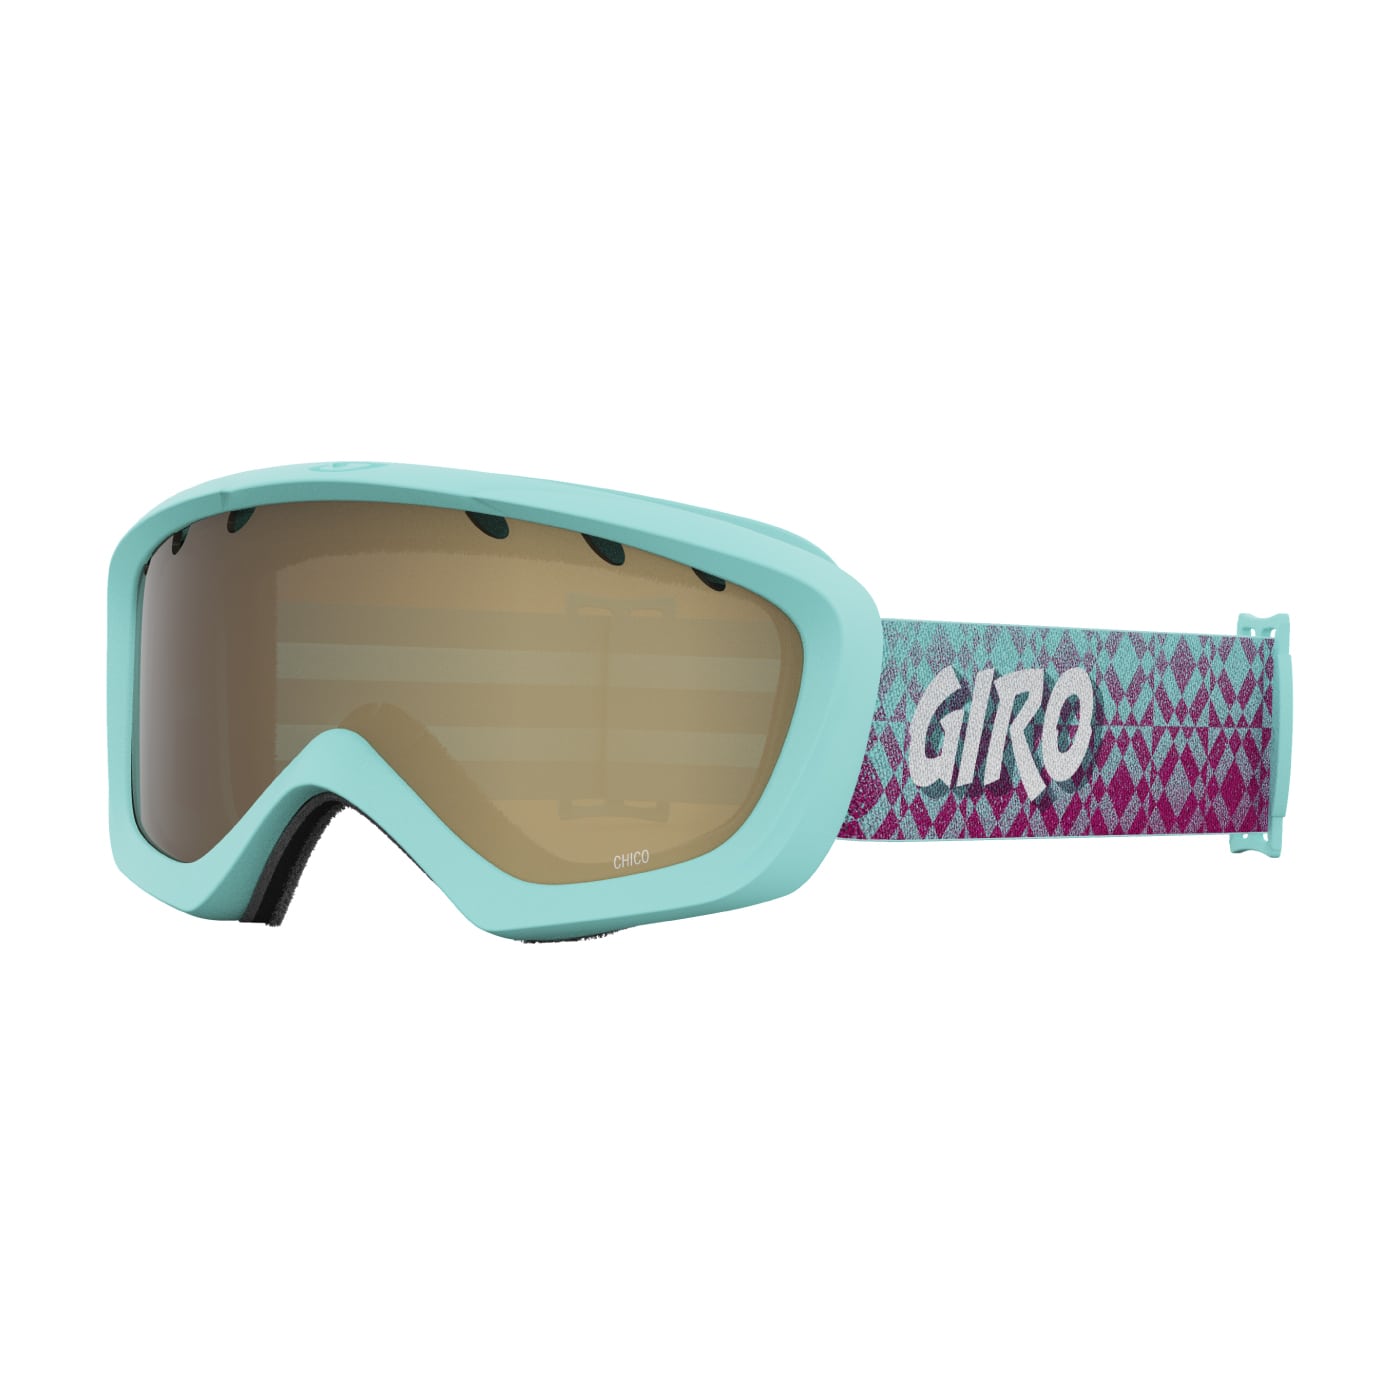 Giro Chico 2.0 Toddler Ski Goggles - Snowboard Goggles for Kids, Boys &  Girls 2-4 - Anti-Fog